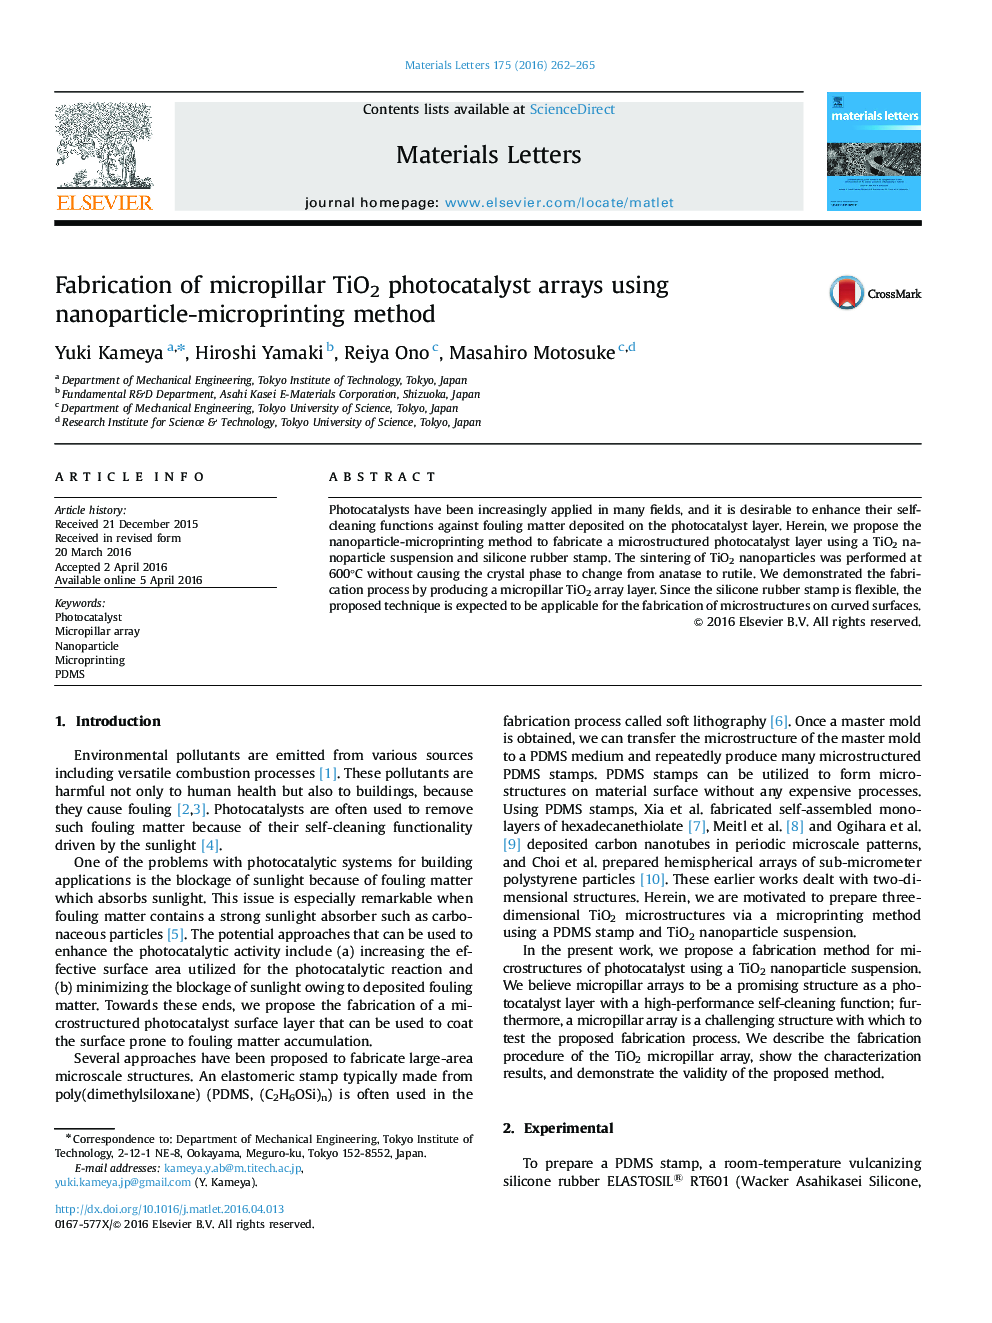 Fabrication of micropillar TiO2 photocatalyst arrays using nanoparticle-microprinting method